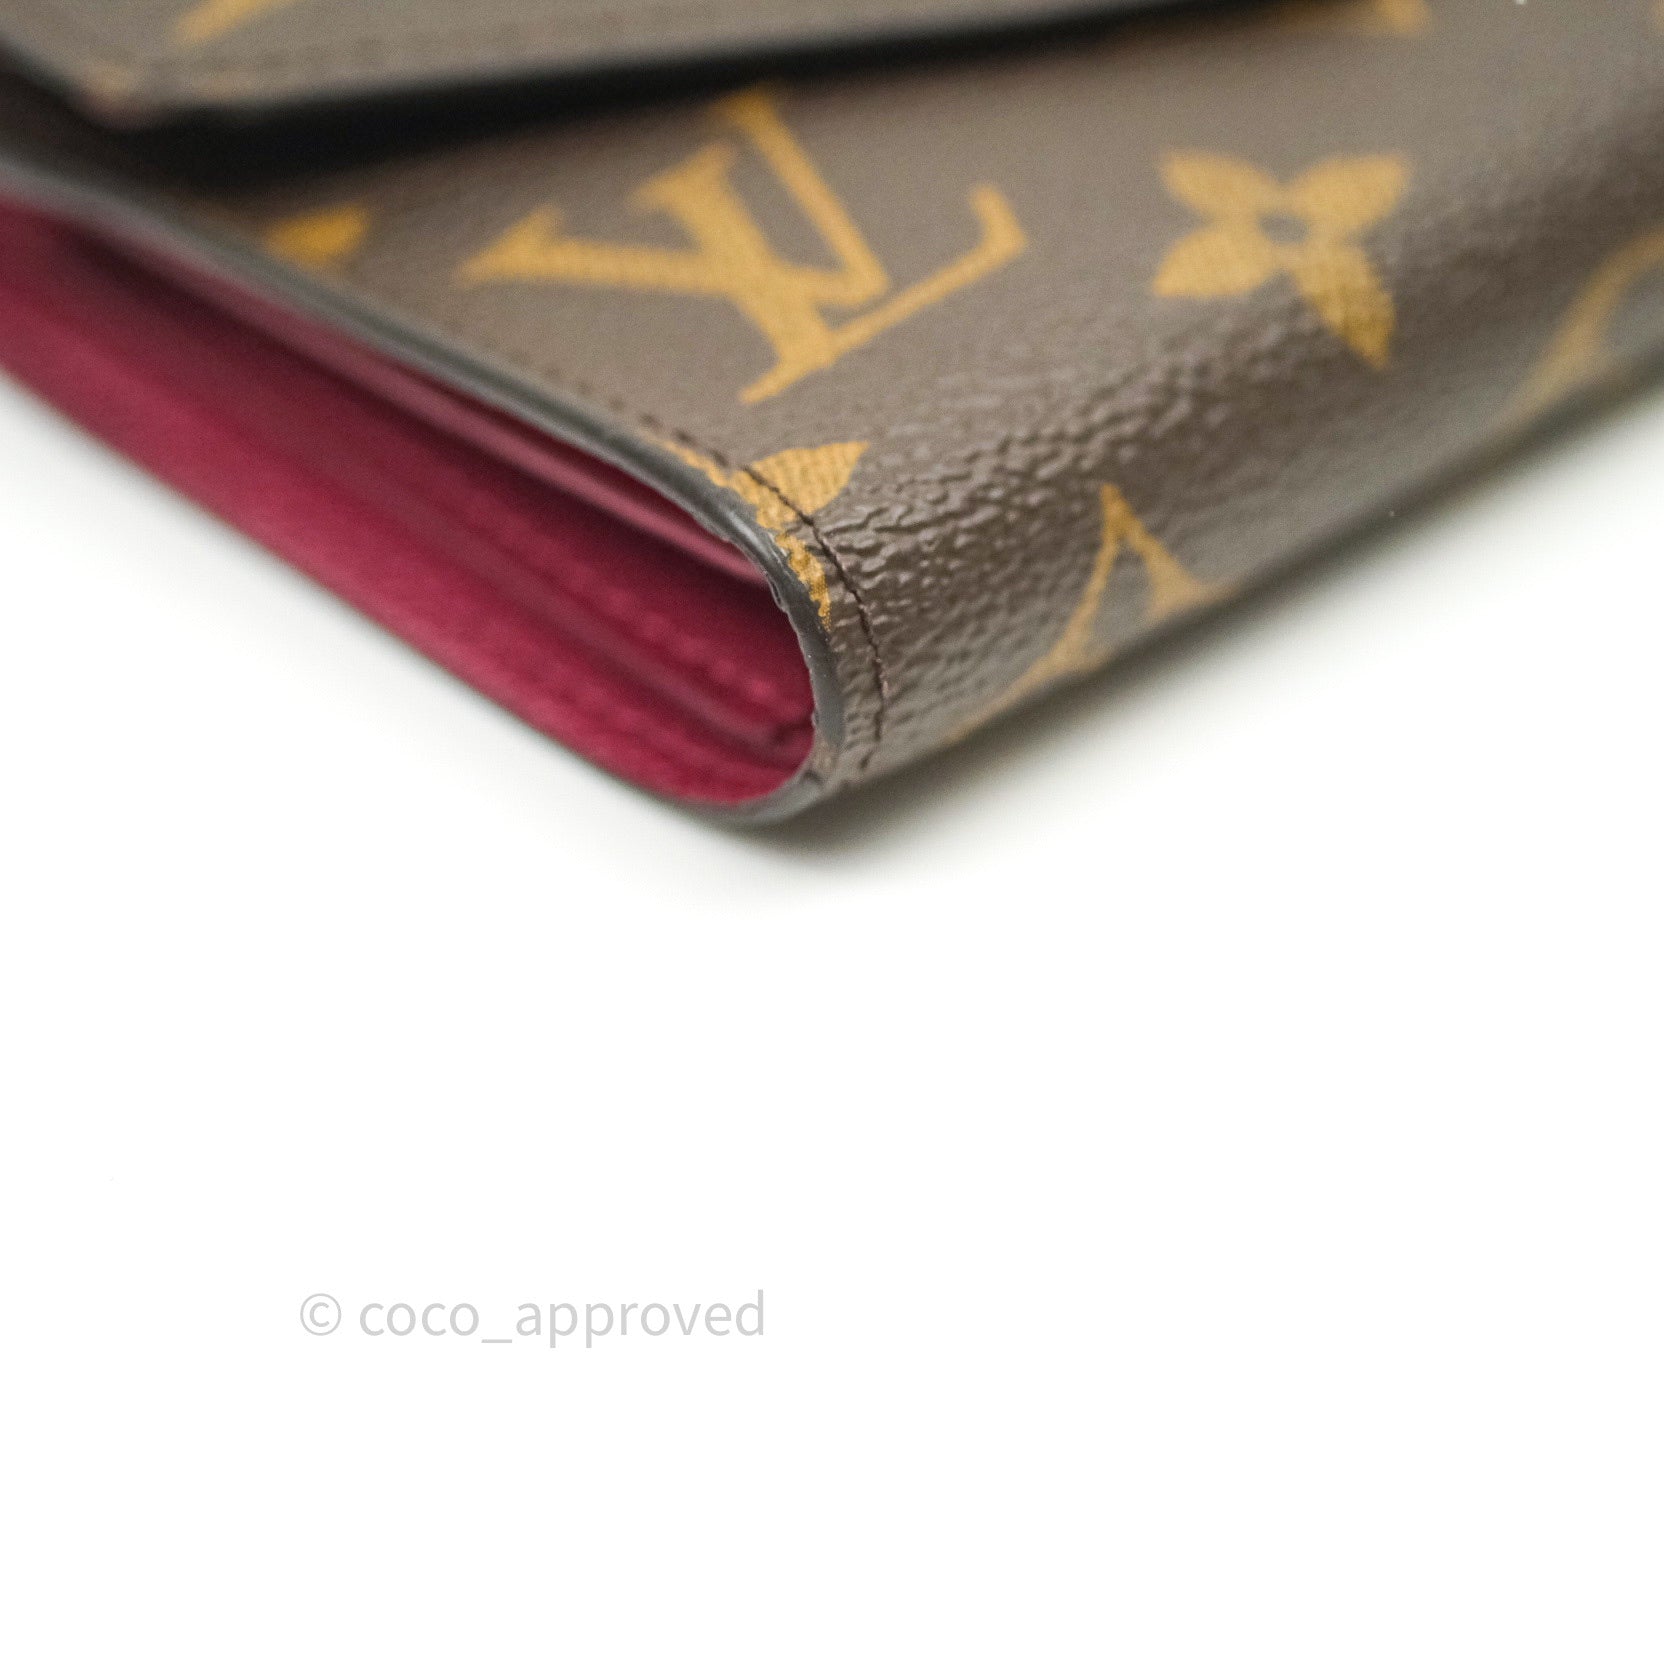 Louis Vuitton Joey Wallet Monogram – Coco Approved Studio